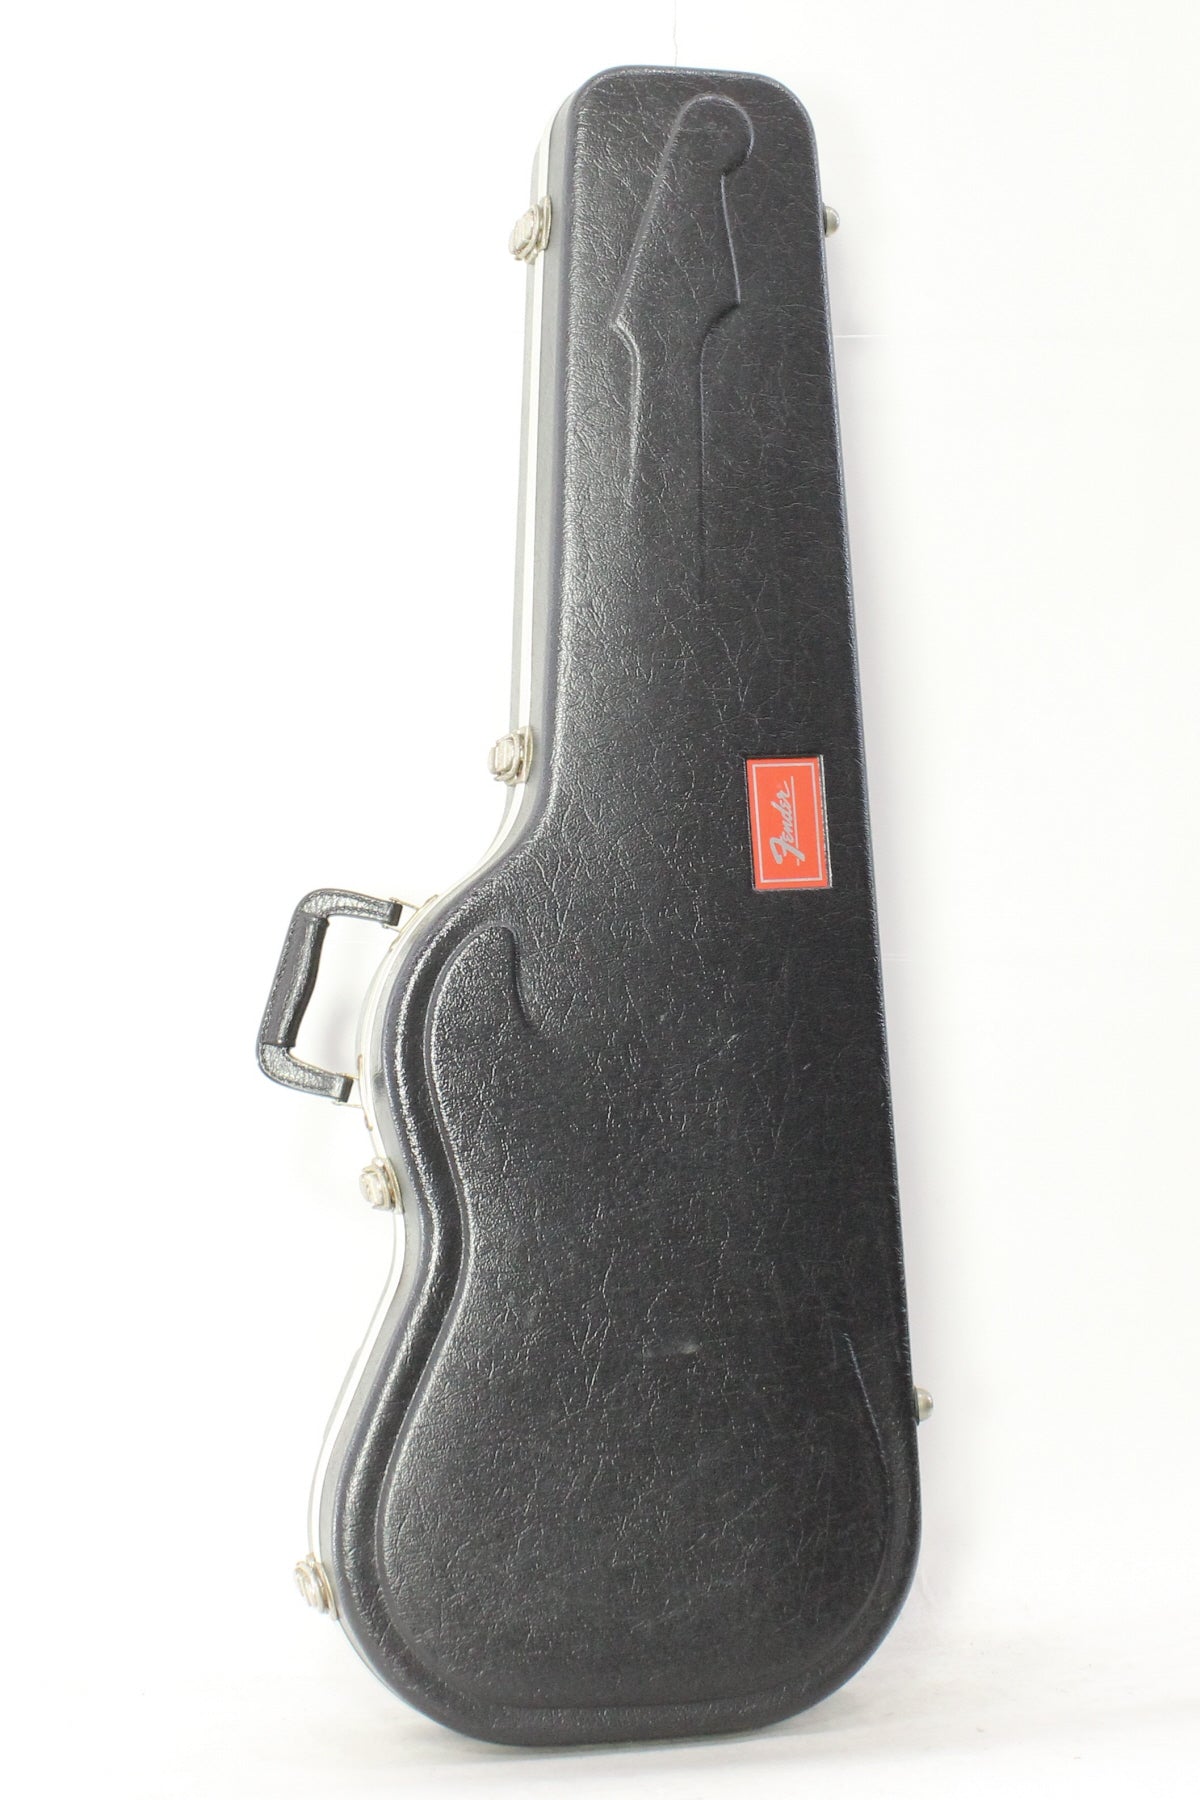 [SN N3146493] USED Fender / American Standard Stratocaster Brown Sunburst Rosewood Fingerboard 1993 [09]